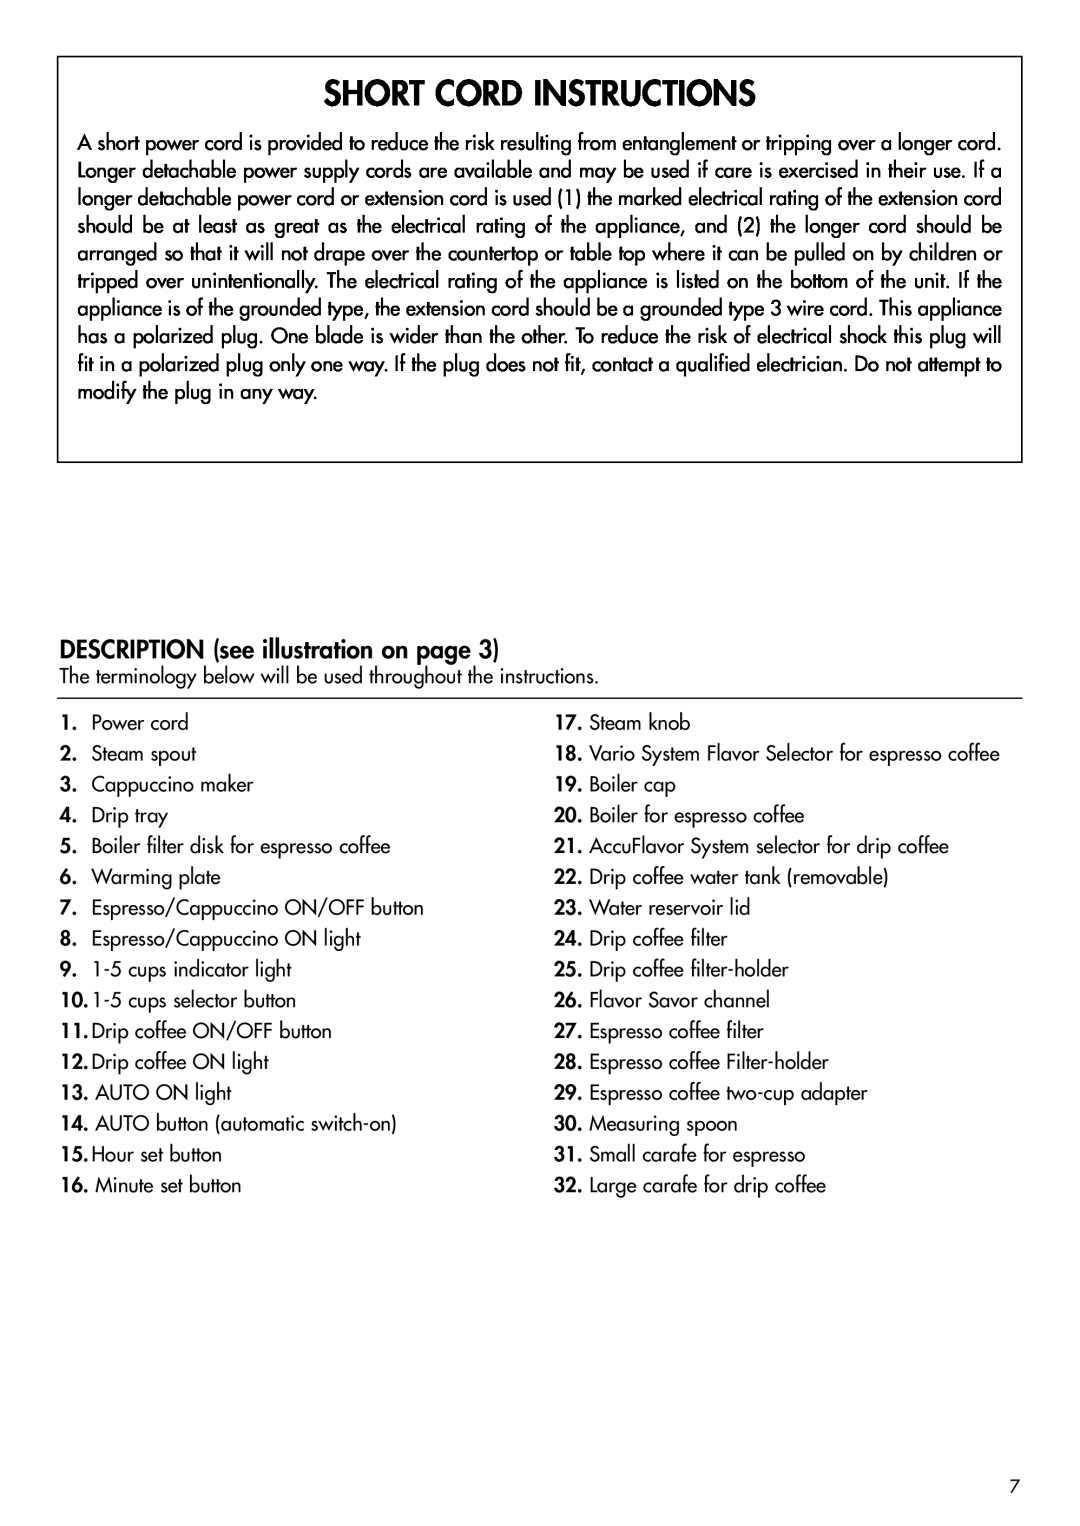 DeLonghi BCO120T manual Short Cord Instructions, DESCRIPTION see illustration on page 